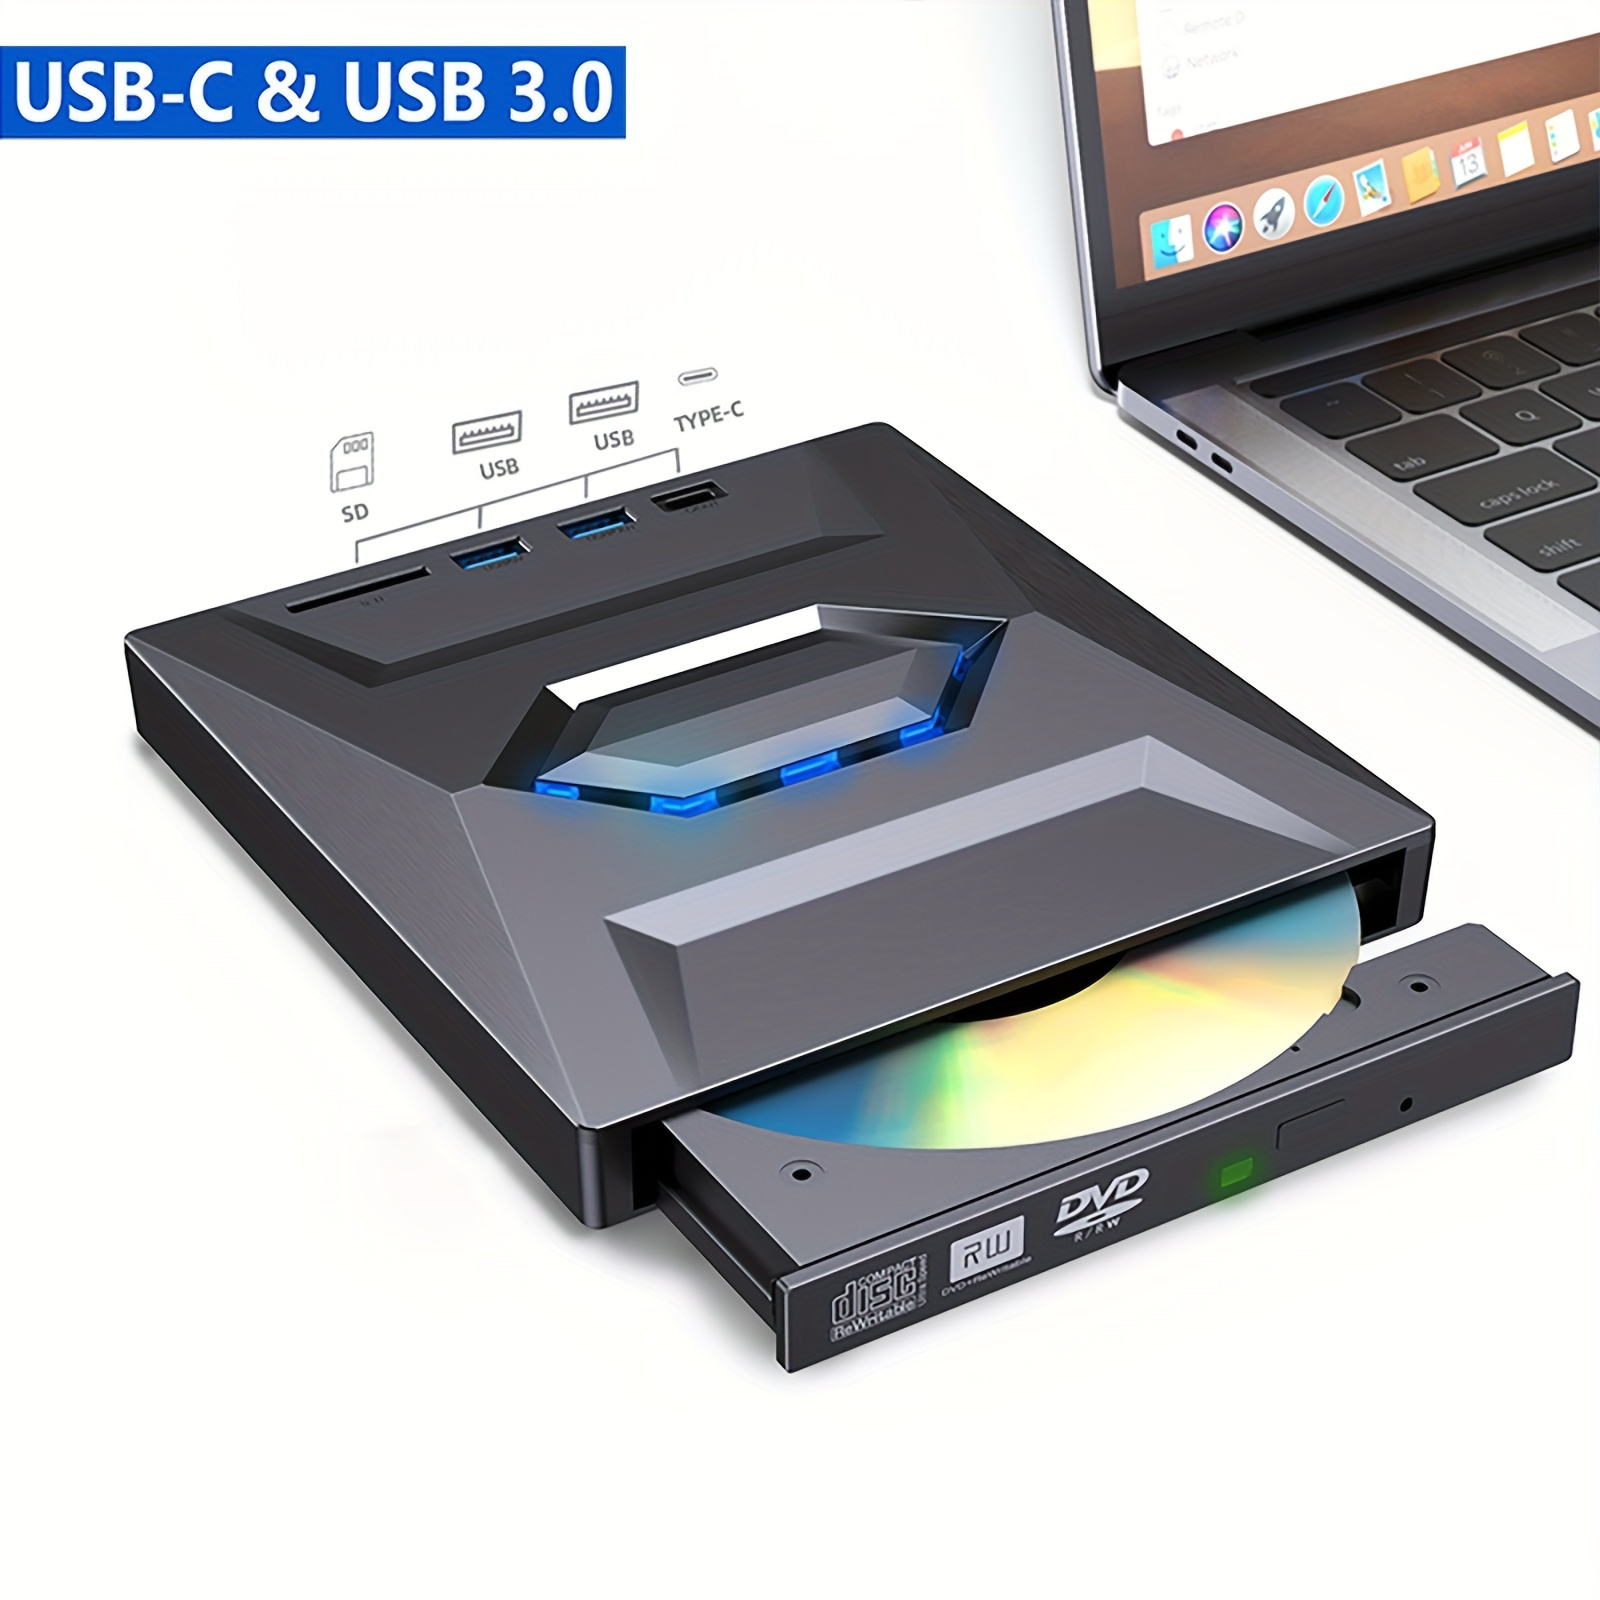 Grabadora de Lector CD/DVD Externa USB 3.0 y Tipo C, CD